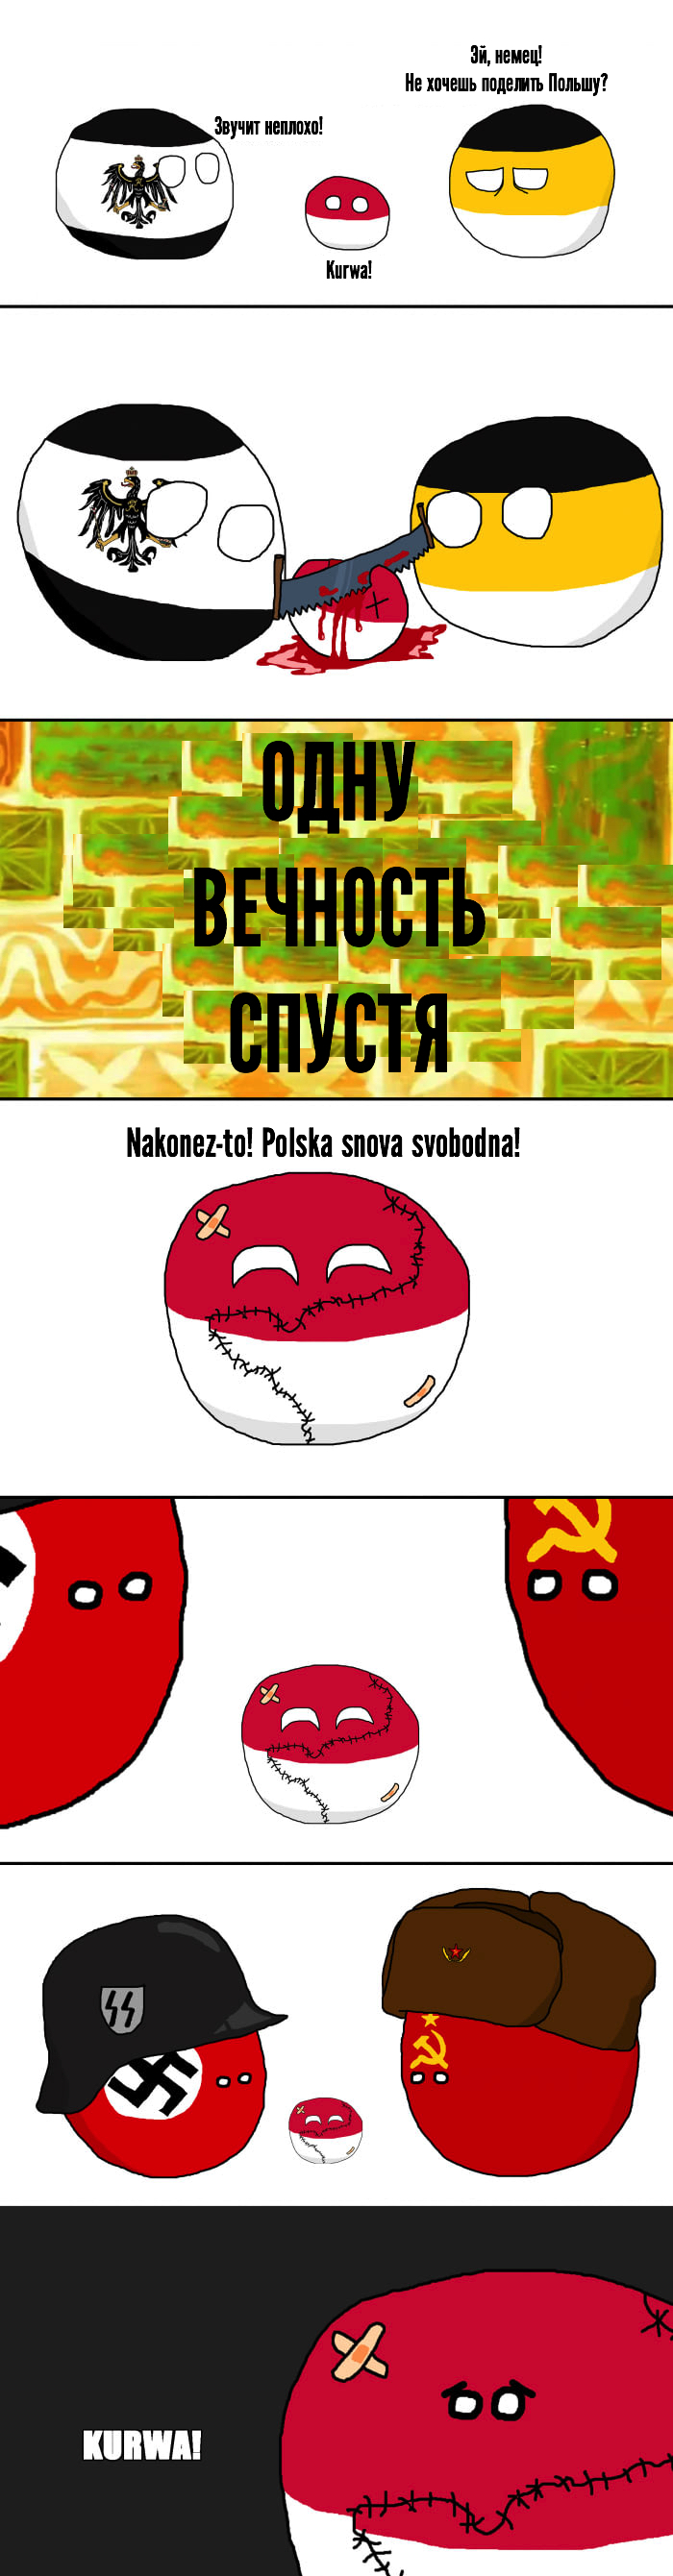 Hard Polish fate - Countryballs, Polska strong, Longpost, Politics